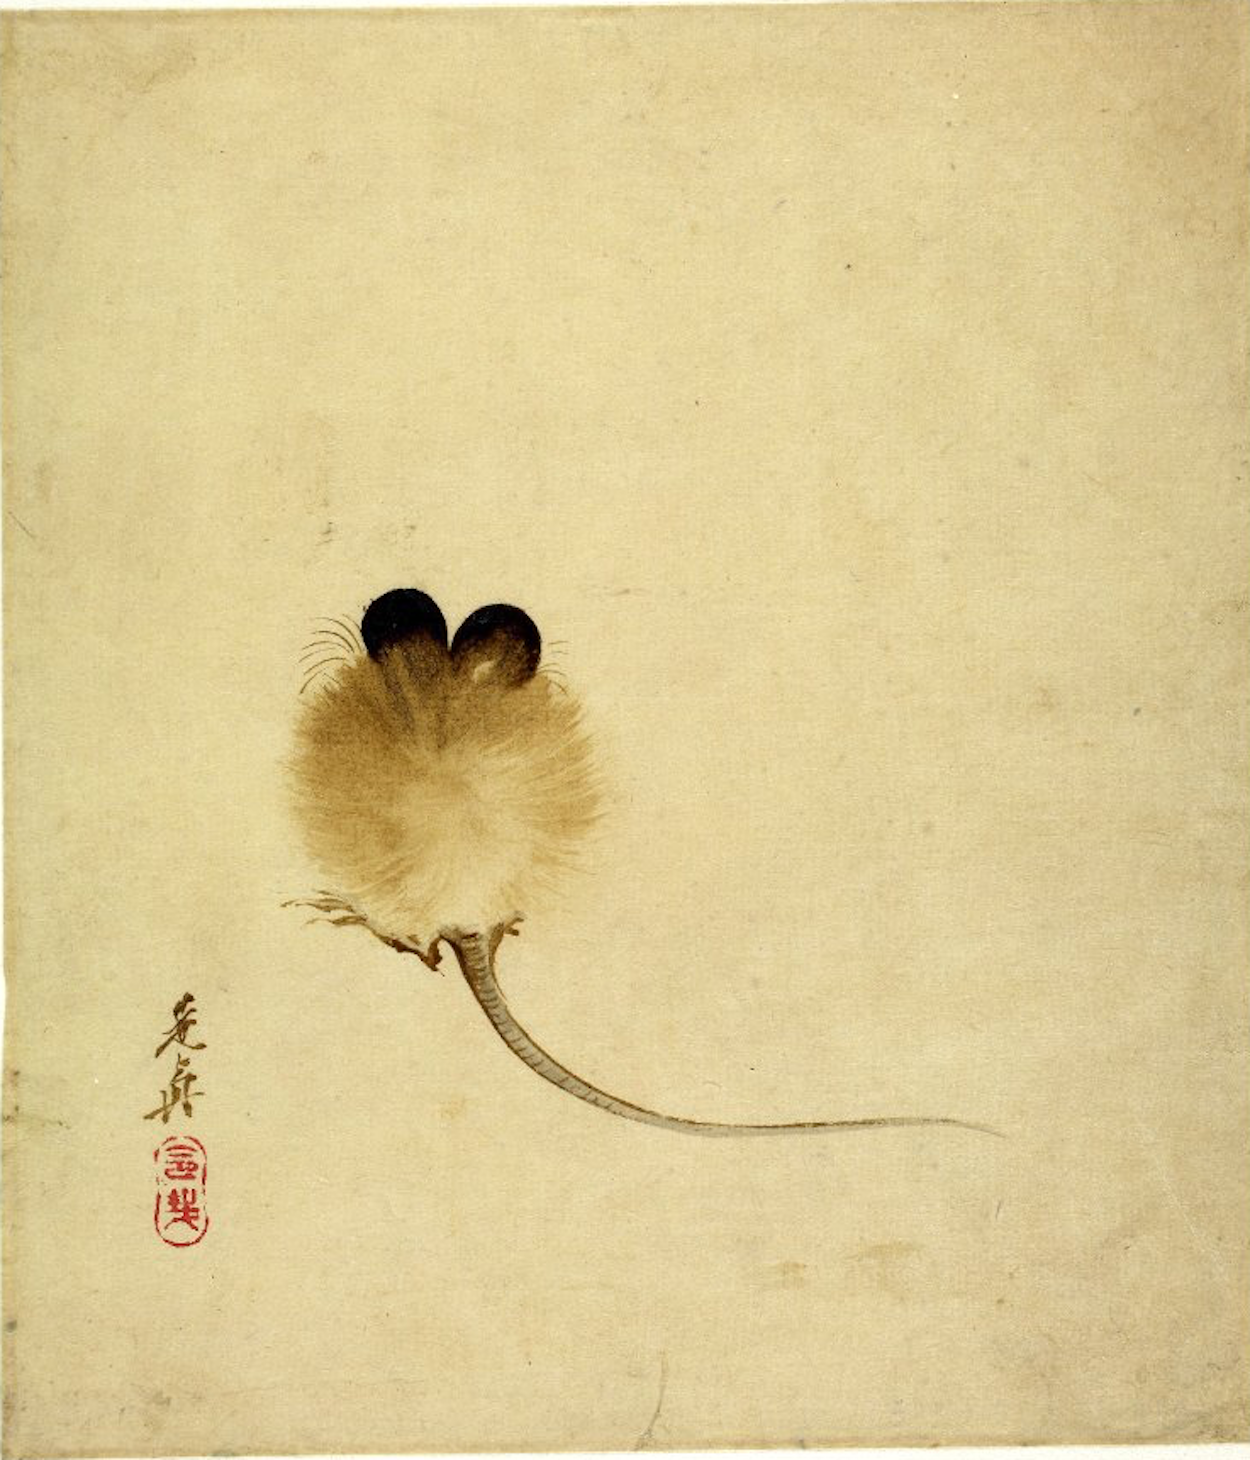 Mouse by Shibata Zeshin - 19th century - 19.4 x 16.8 cm British Museum